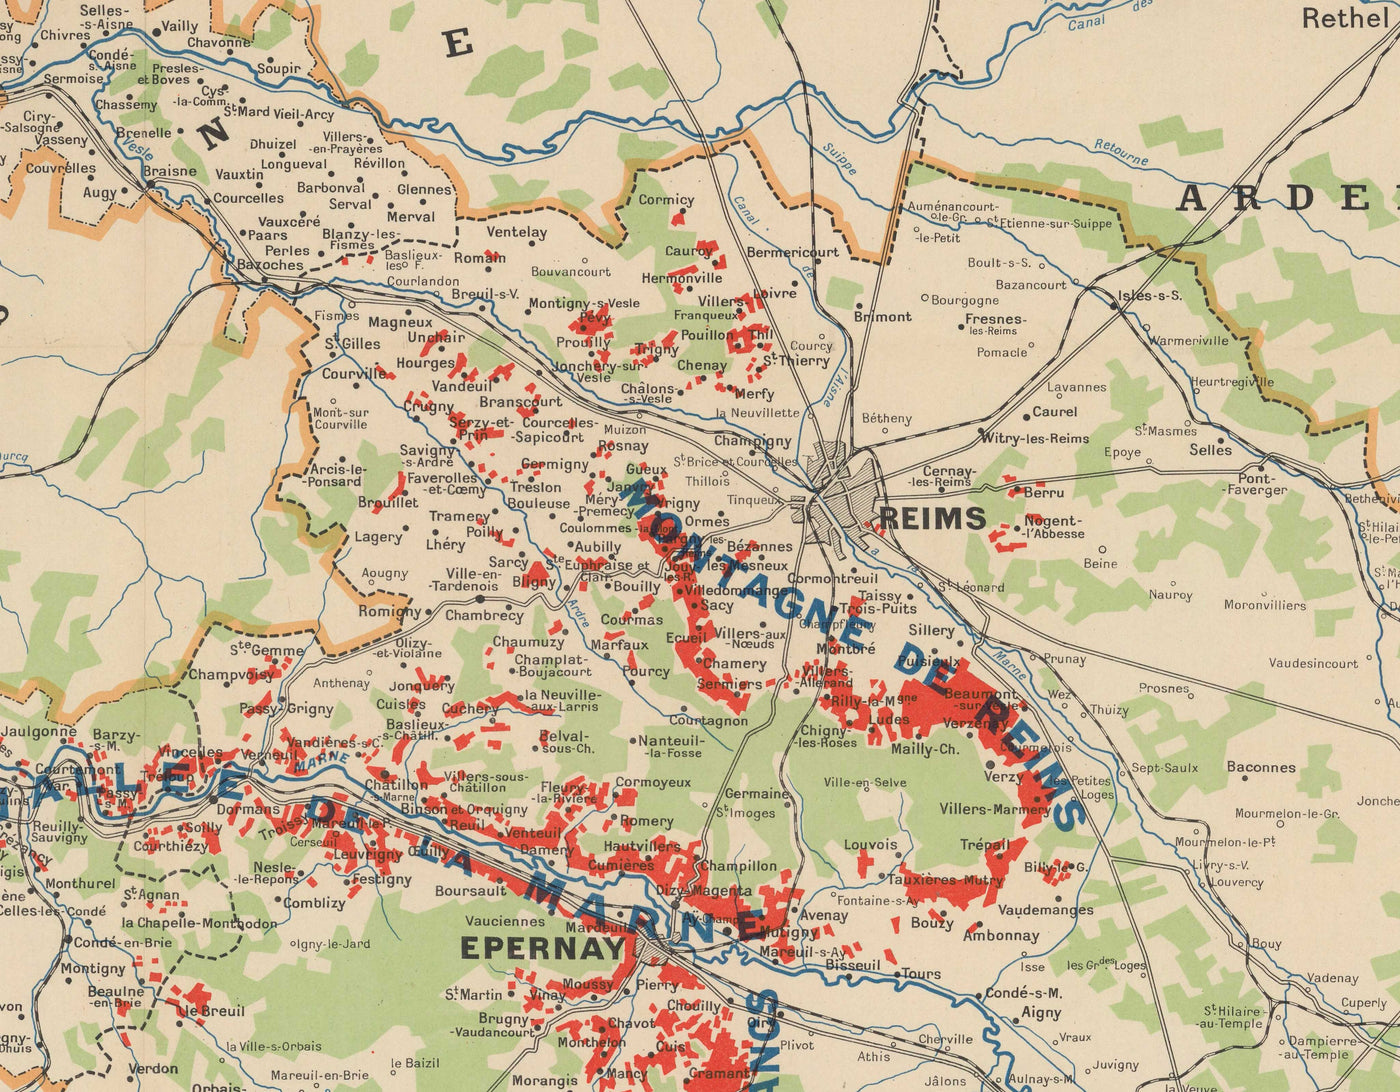 Antiguo mapa de viñedos de Champaña, Francia, 1944 por Louis Larmat - Reims, Epernay, Troyes, Chatau-Thierry, Bar-Sur-Seine